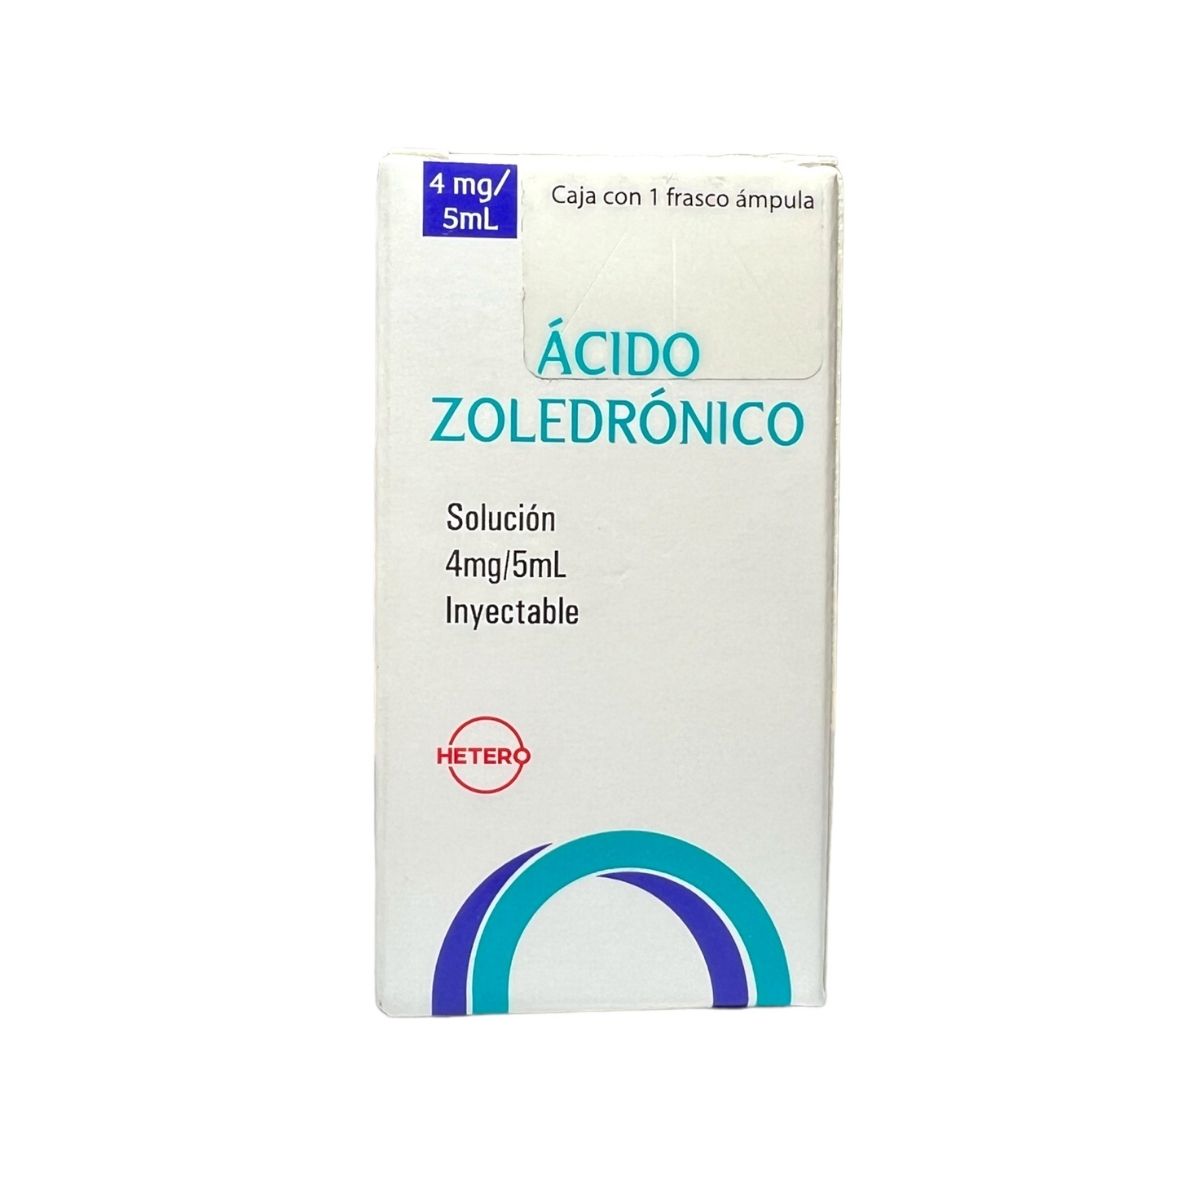 Ácido Zolendrónico 4 mg / 5 mL Hetero